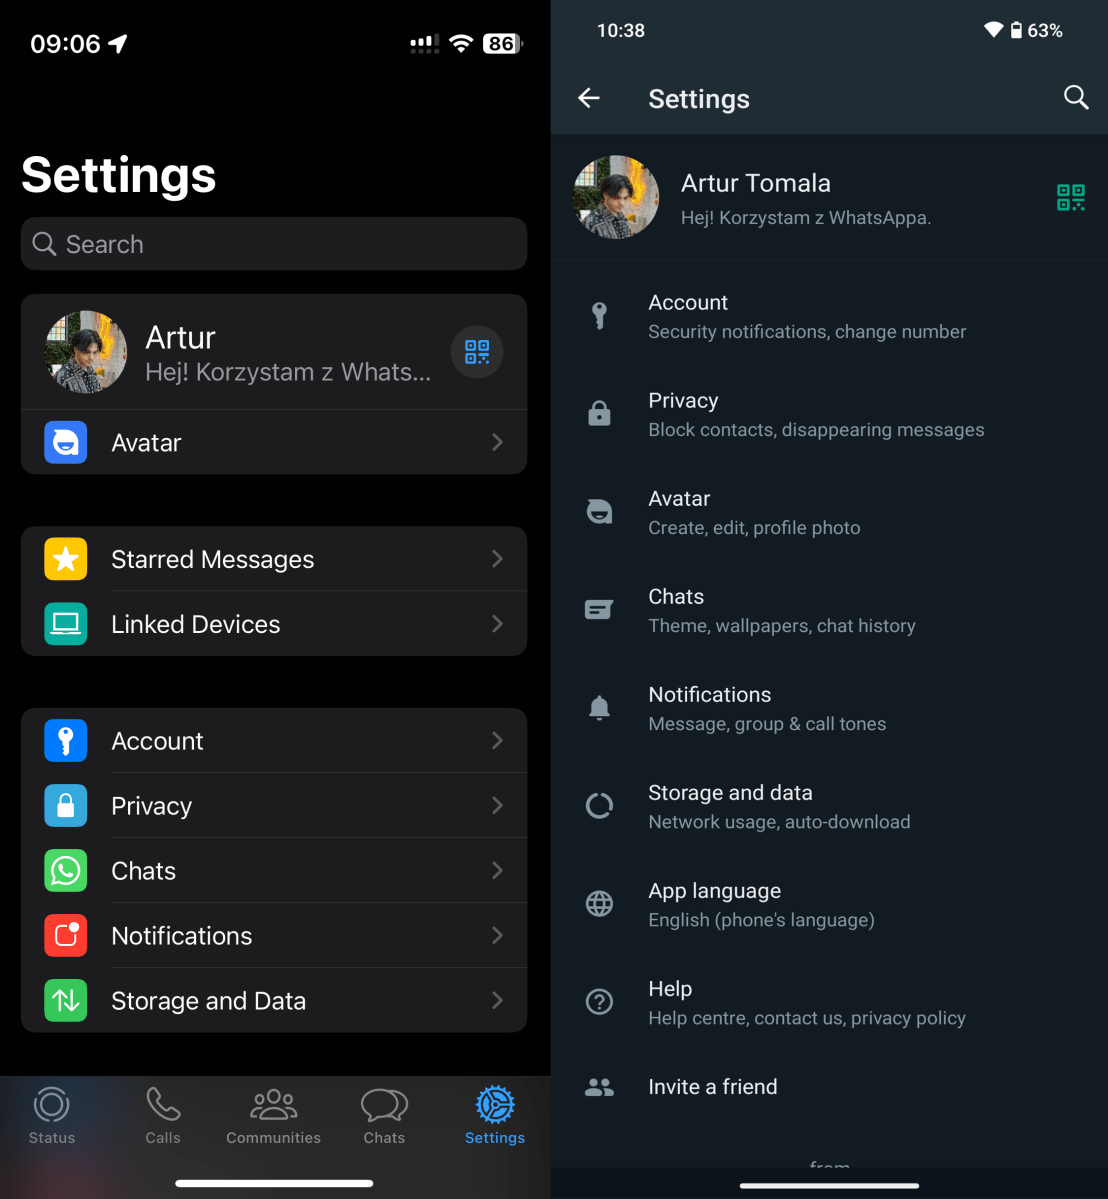 Screenshots of WhatsApp's in-app settings